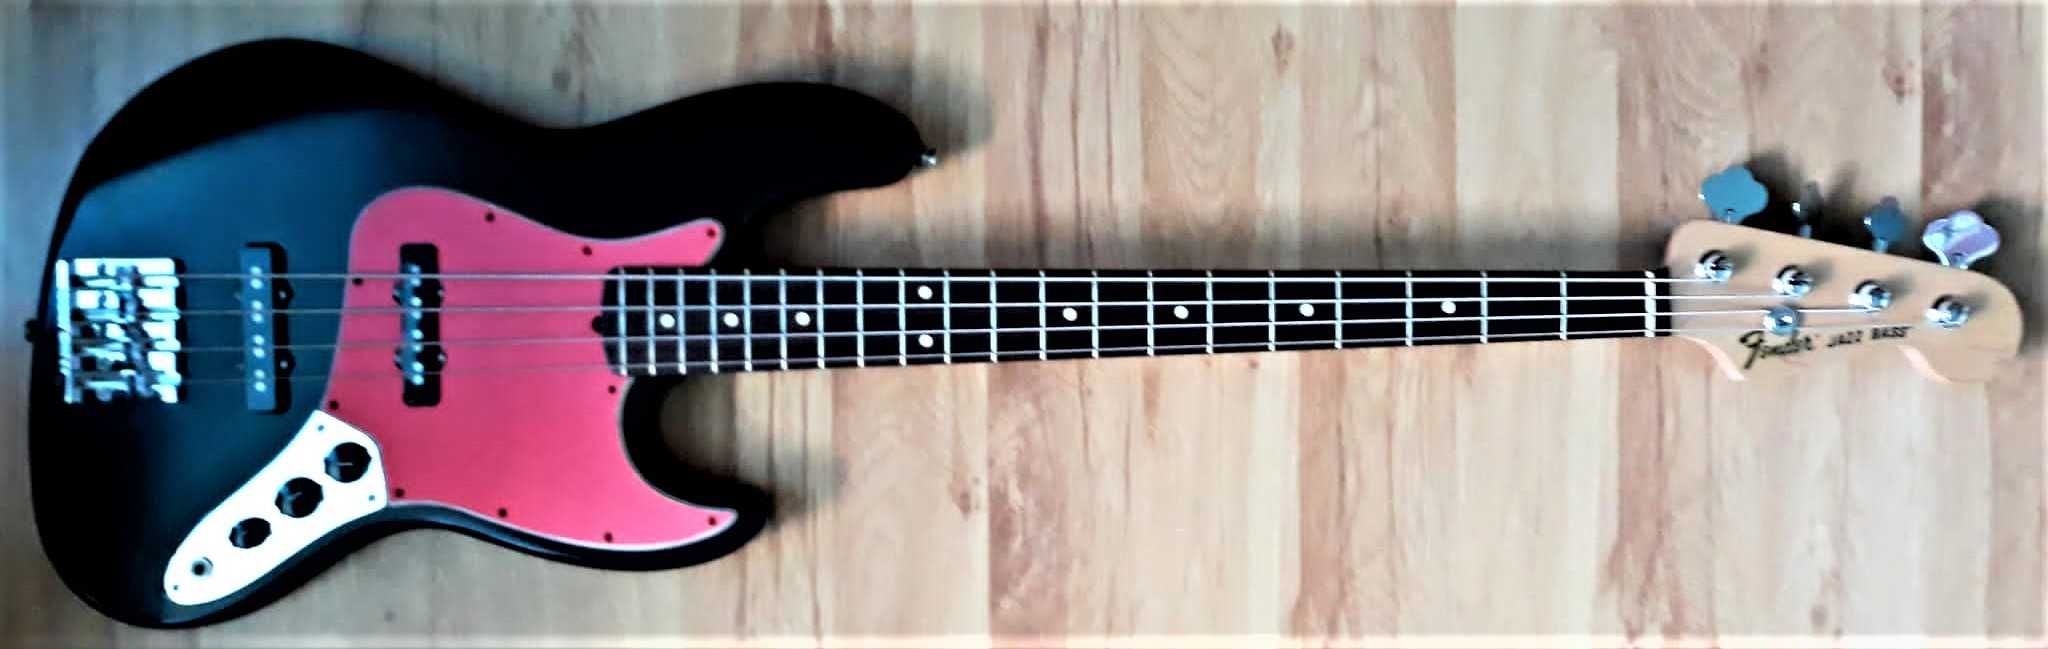 Chitara Fender Highway One jazz bass 2009 made in USA